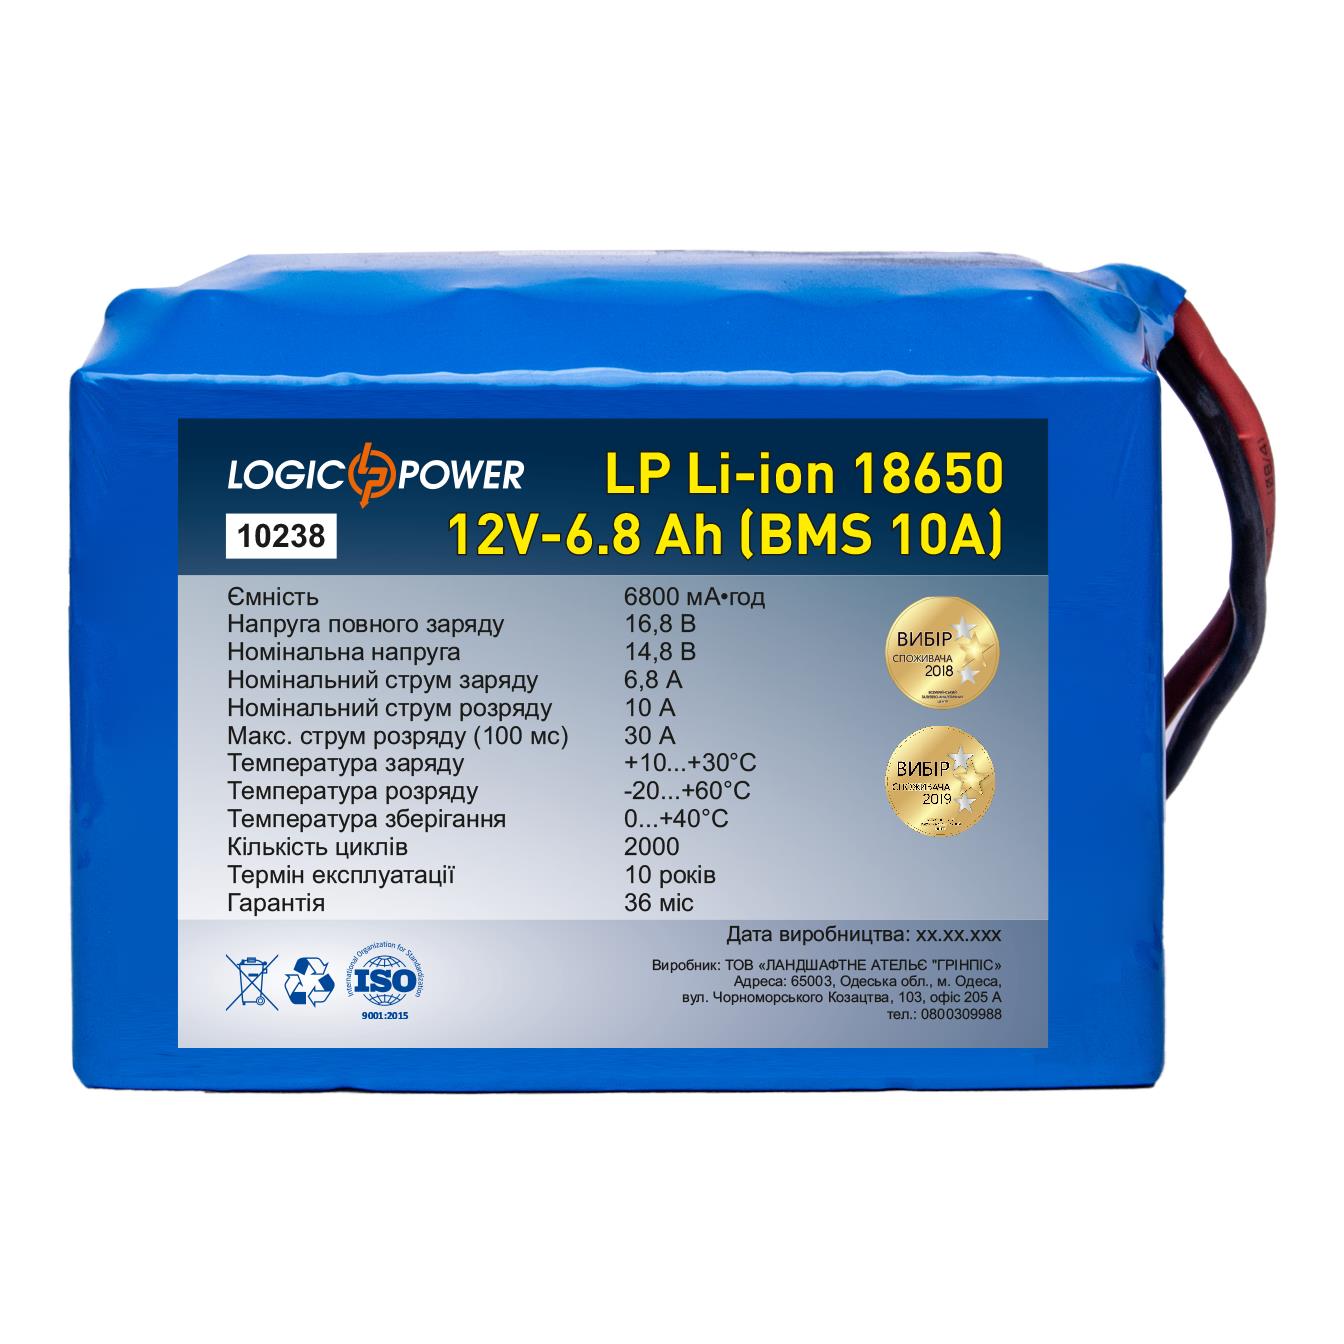 Аккумулятор Li-Ion LogicPower LP Li-ion 18650 12V - 6.8 Ah (BMS 10A) (10238)